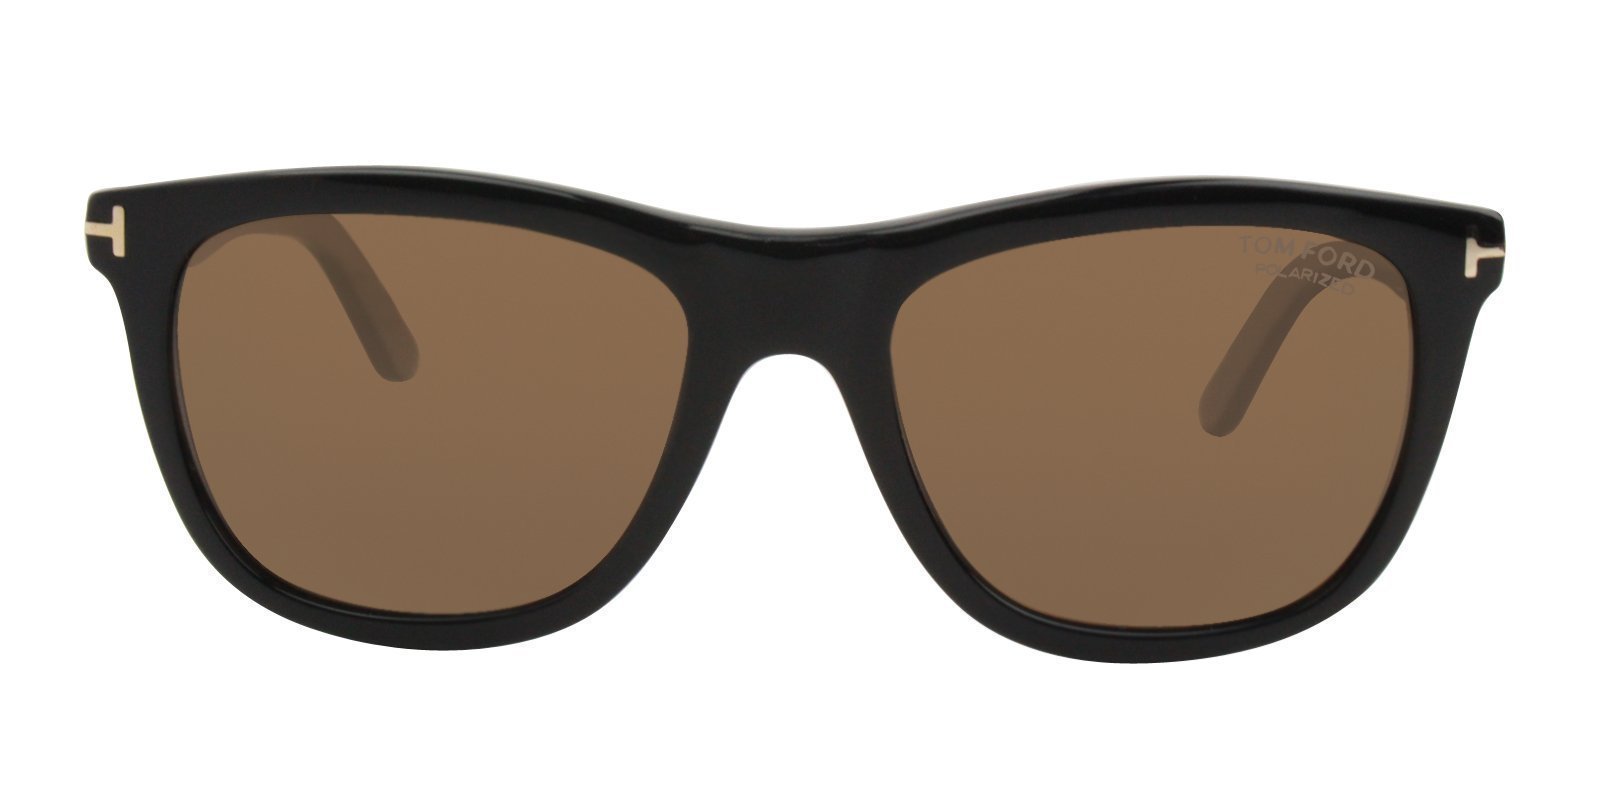 Gade Traktat Whitney How to wear the Tom Ford Andrew sunglasses – Designer Eyes